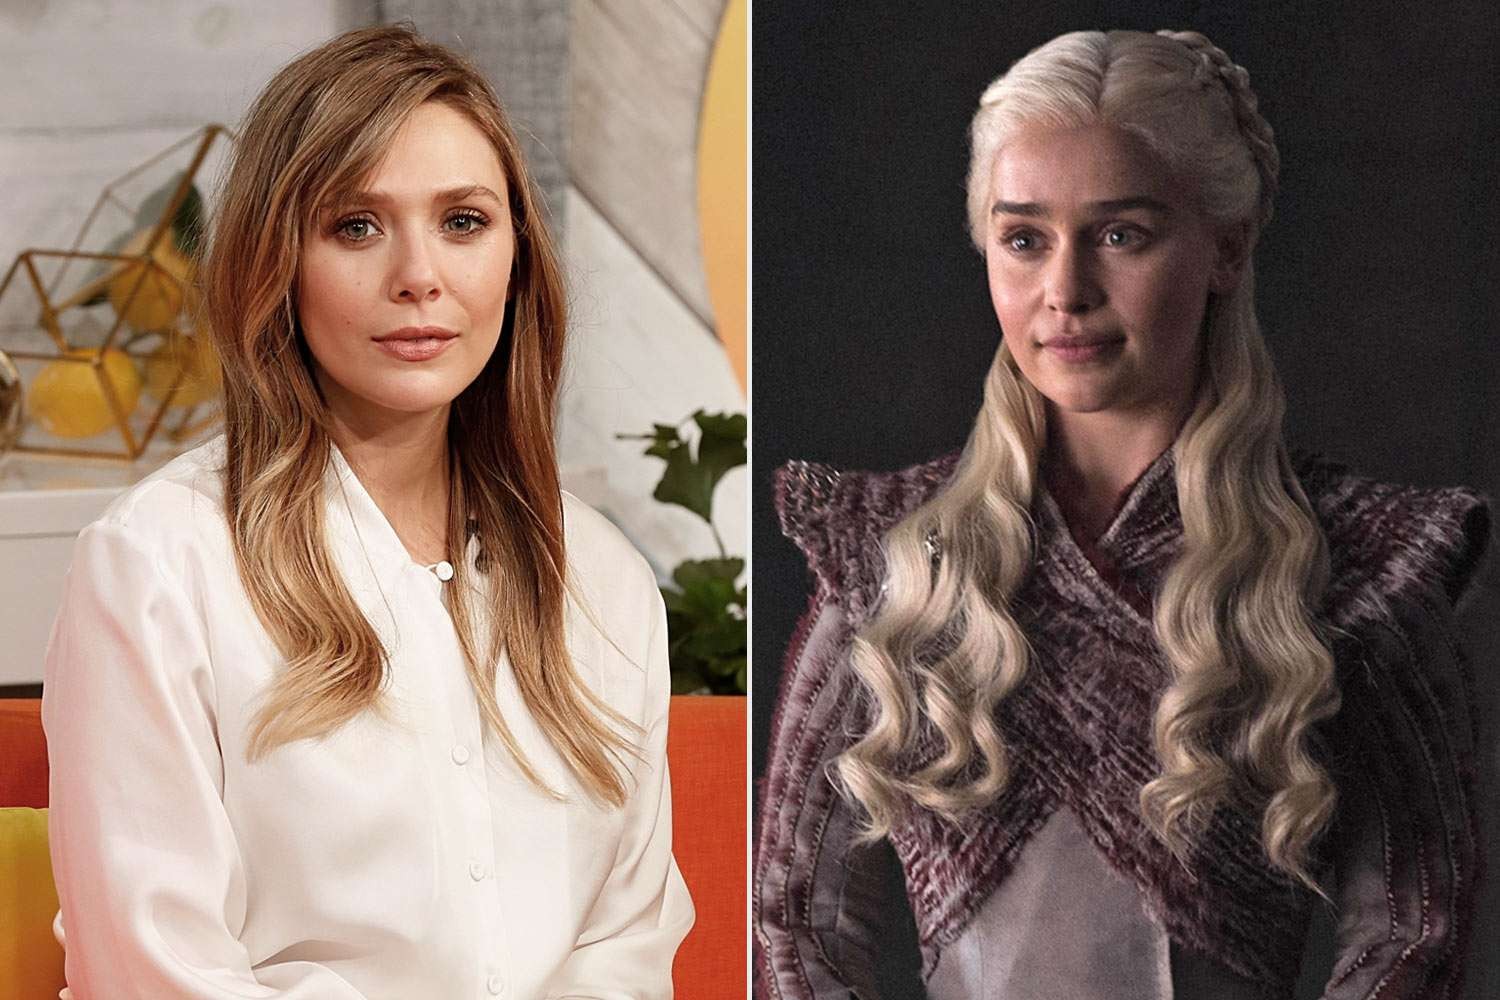 Elizabeth Olsen auditioned for the role of Daenerys Targaryen in Game of Thrones